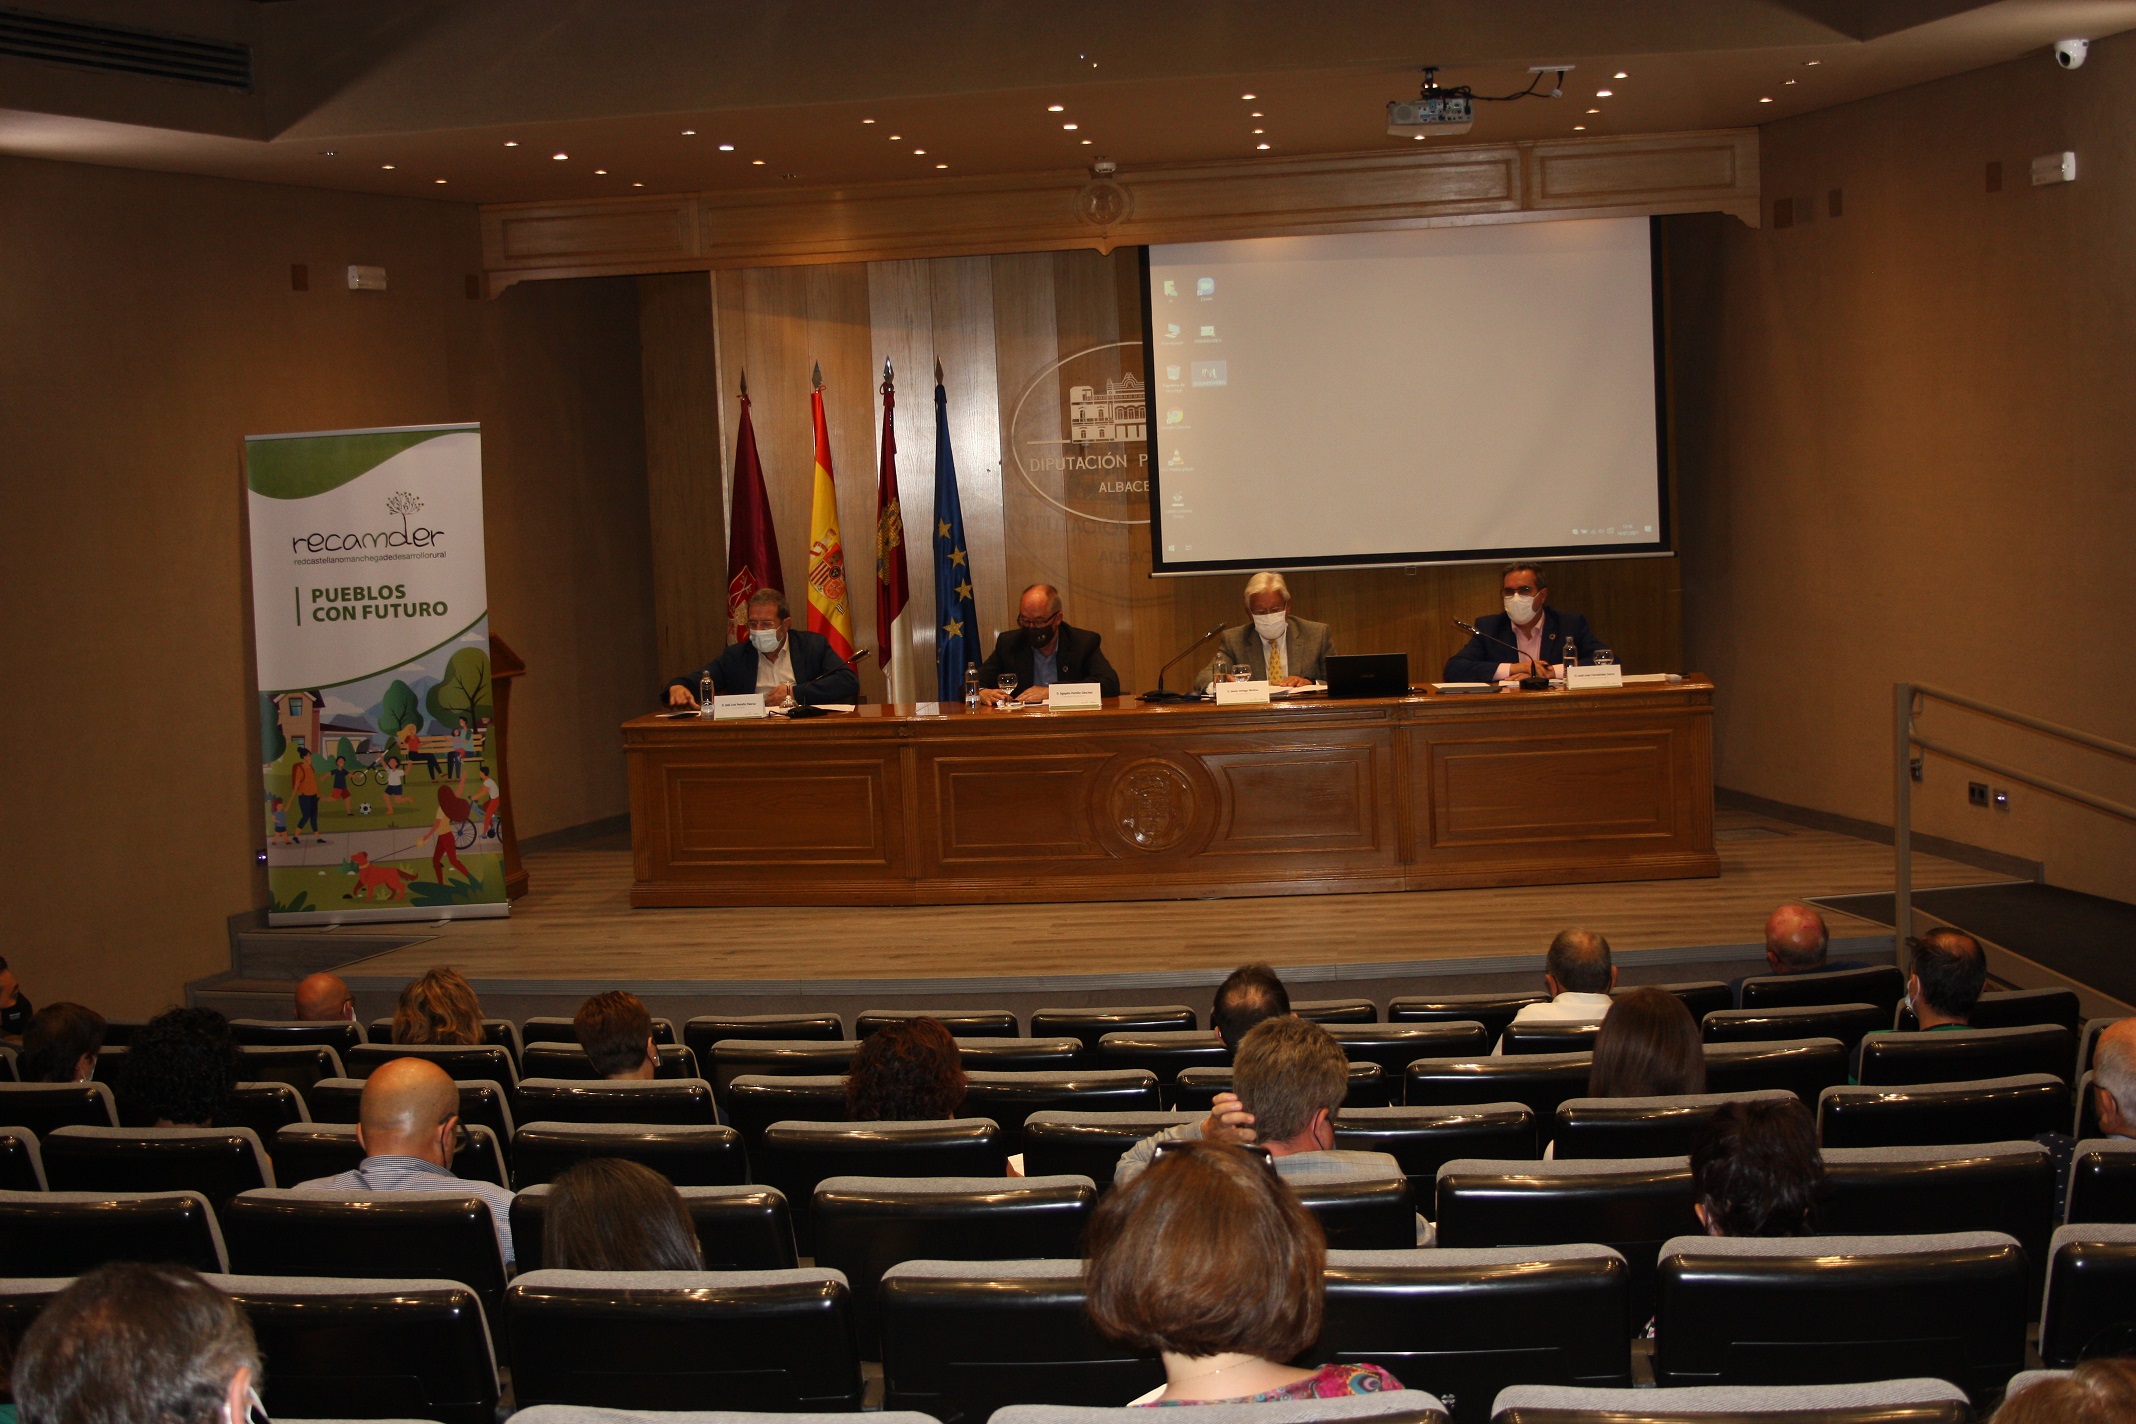 https://www.recamder.es/images/Asamblea_RECAMDER_en_Albacete.jpg